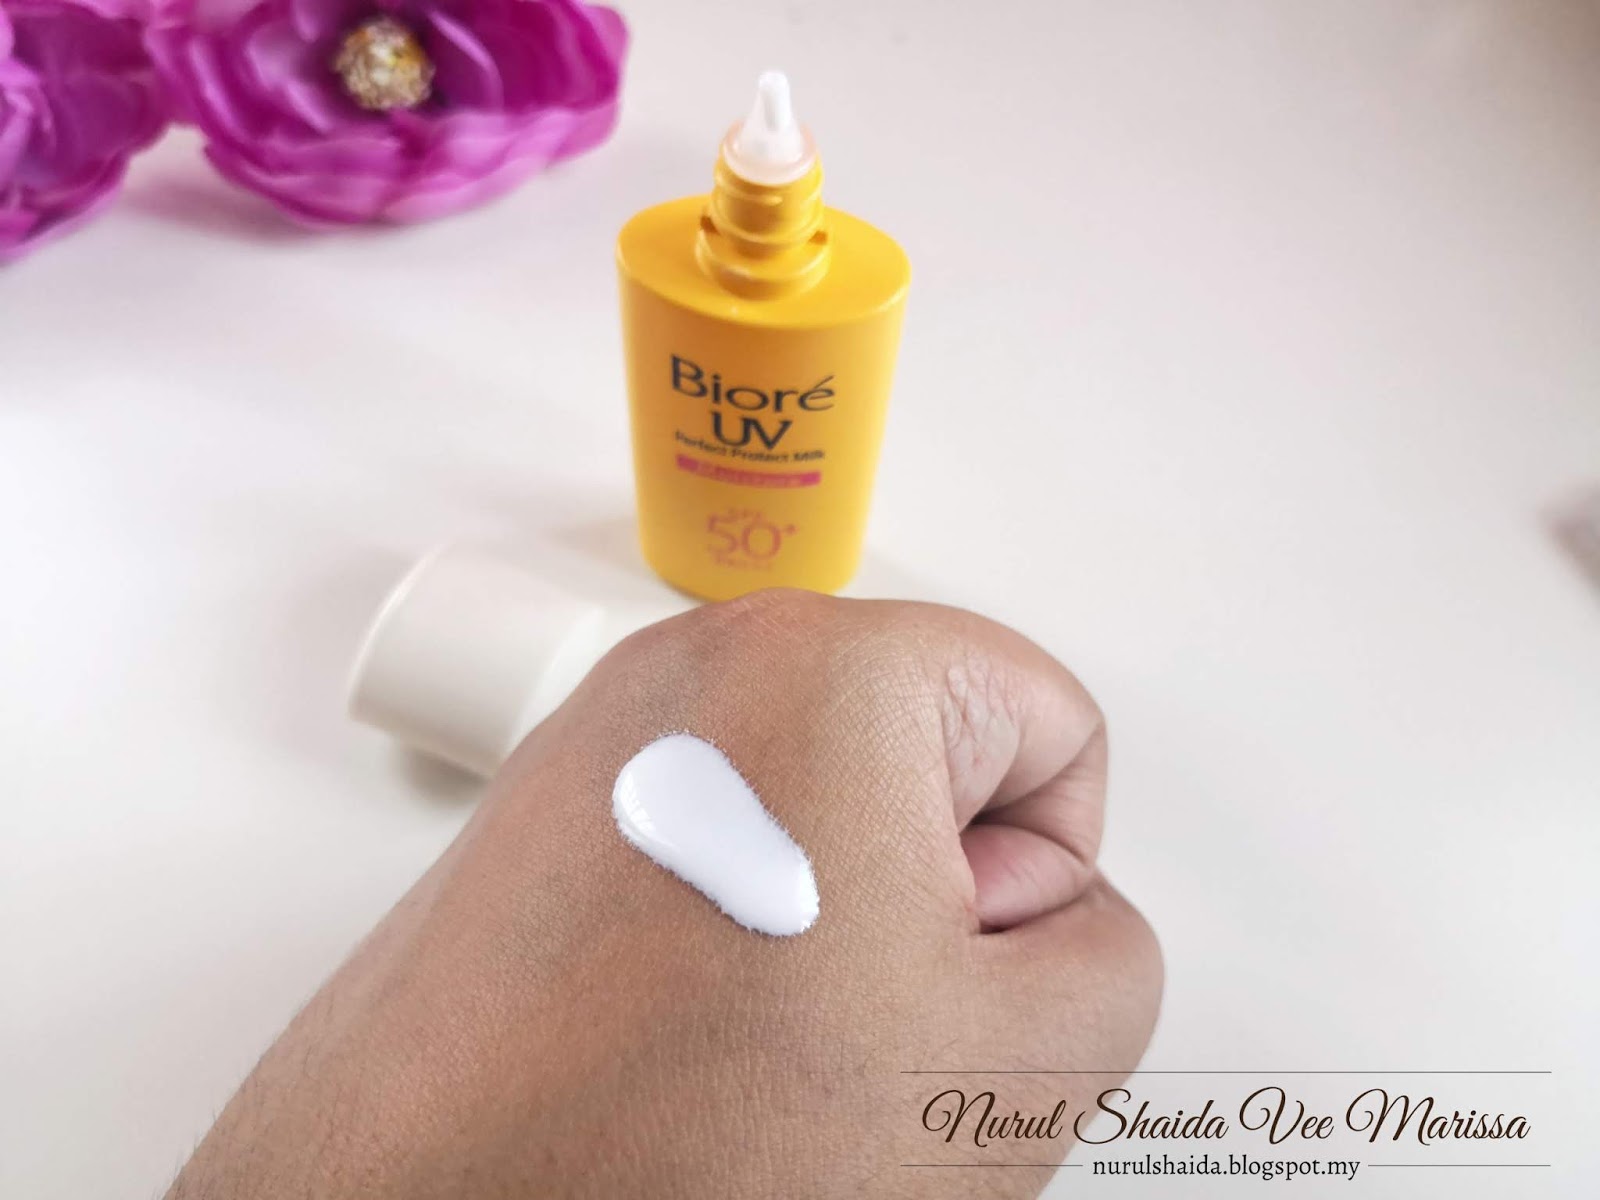 Biore Uv Perfect Protect Milk Review Nurul Shaida Vee Marissa Malaysian Beauty Lifestyle Blogger